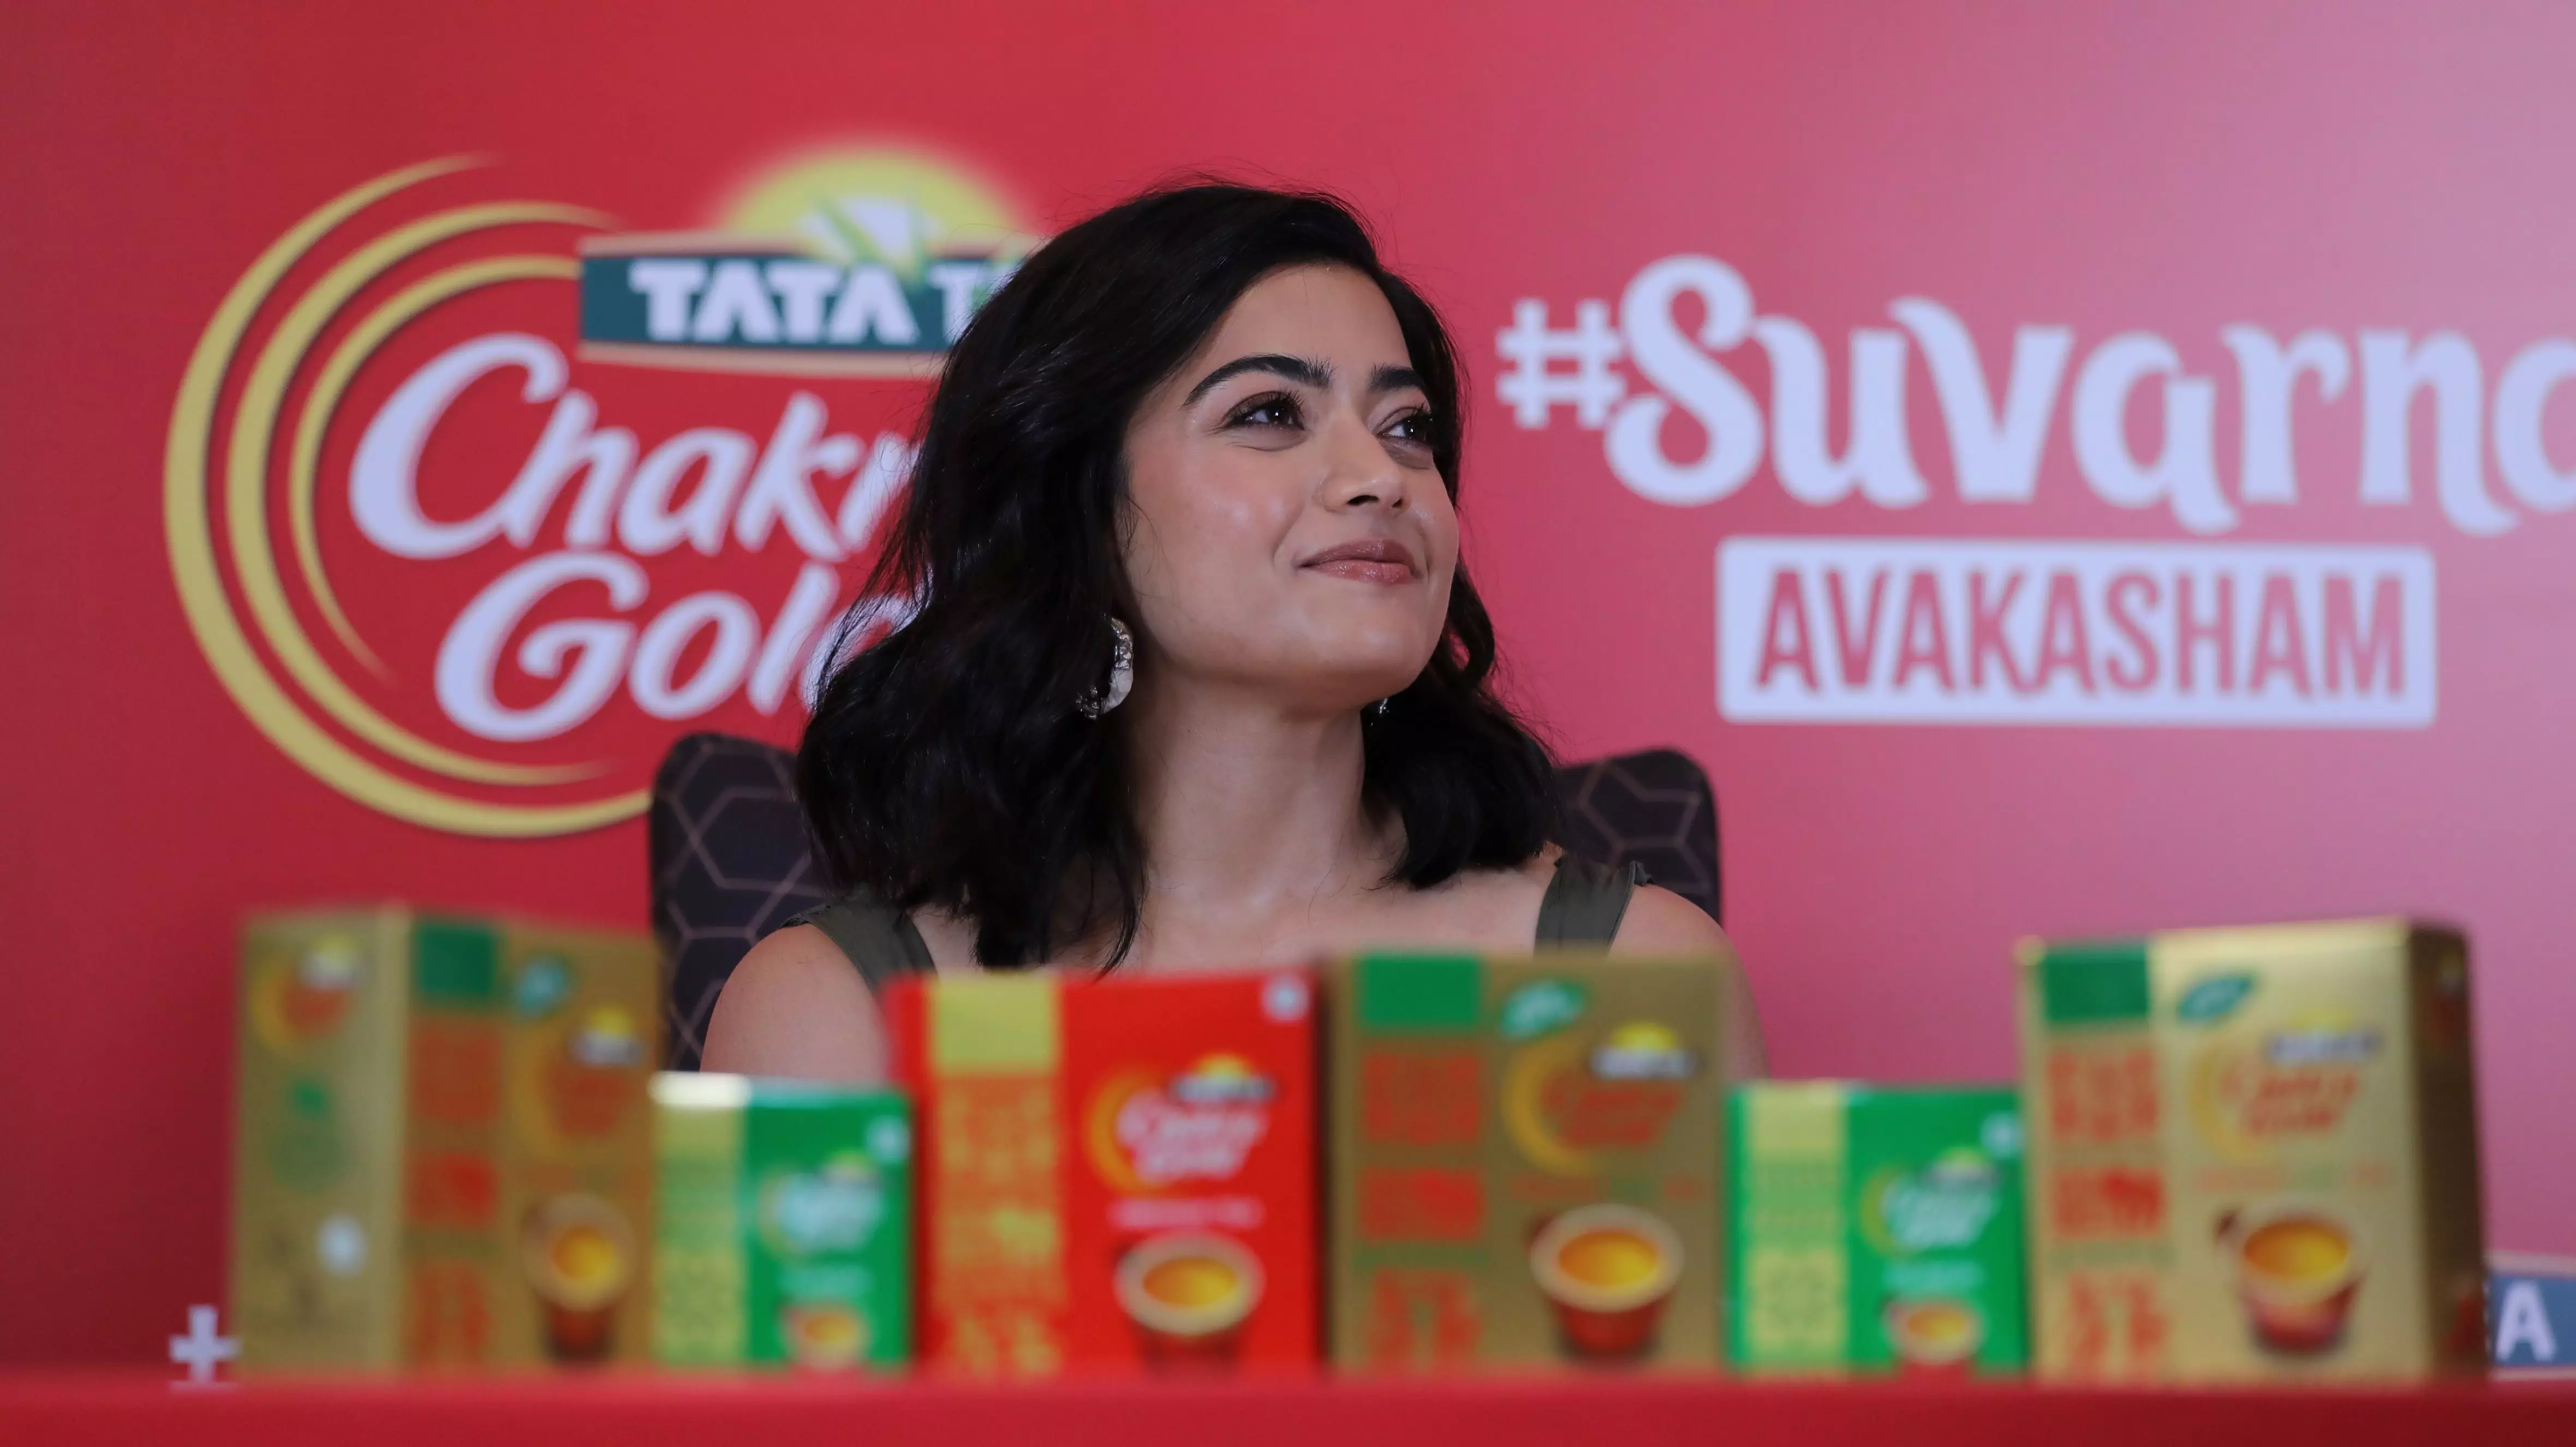 Tata Tea Chakra Hosts Suvarna Avakashan Contest With Rashmika Mandanna